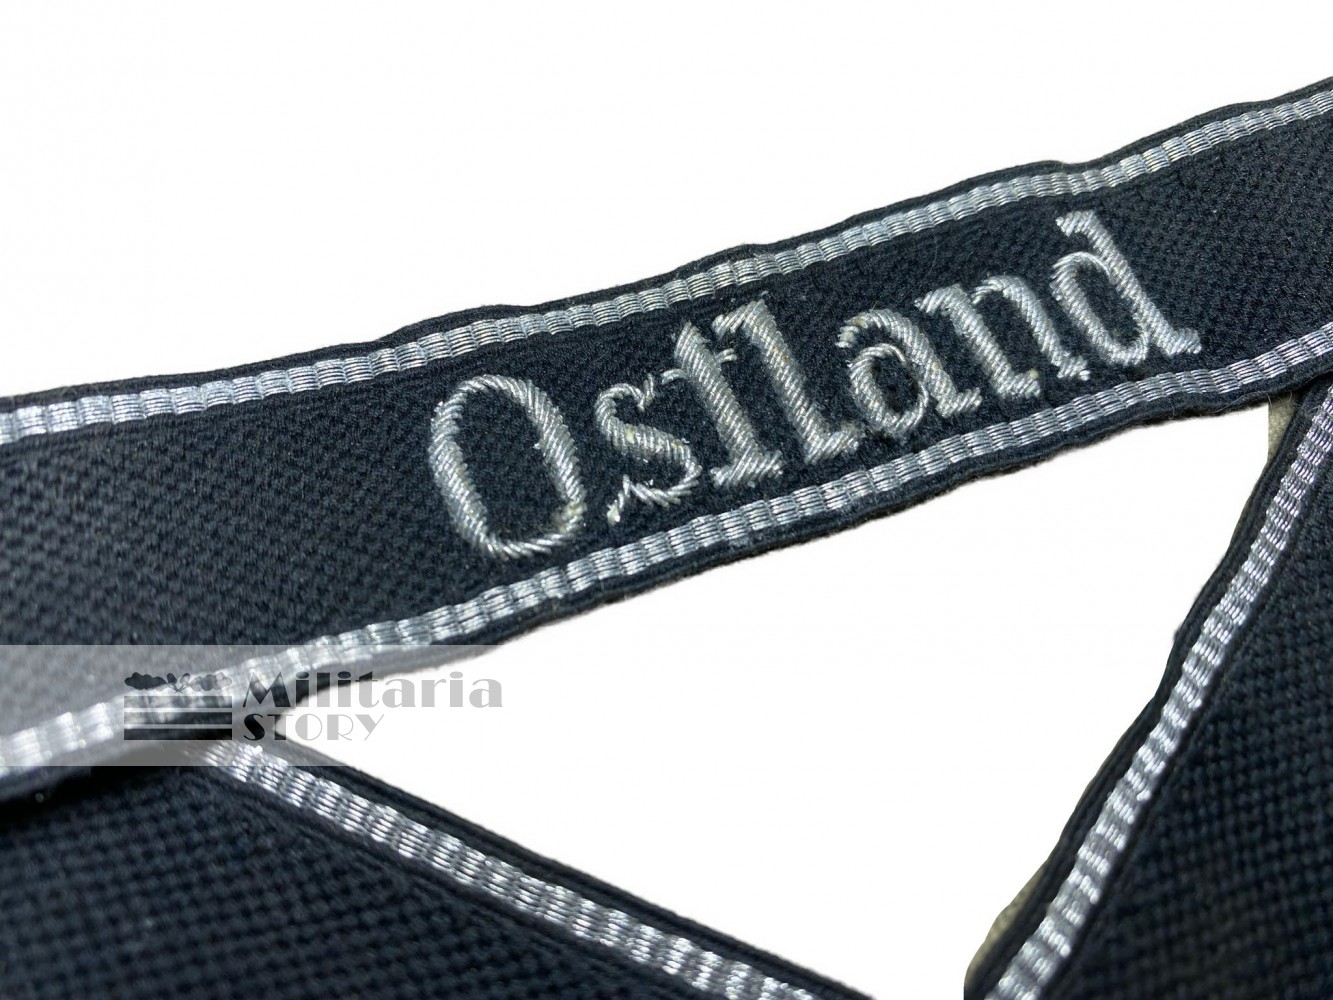 Waffen SS "Ostland" bullion cuff title - Waffen SS "Ostland" bullion cuff title: German Insignia